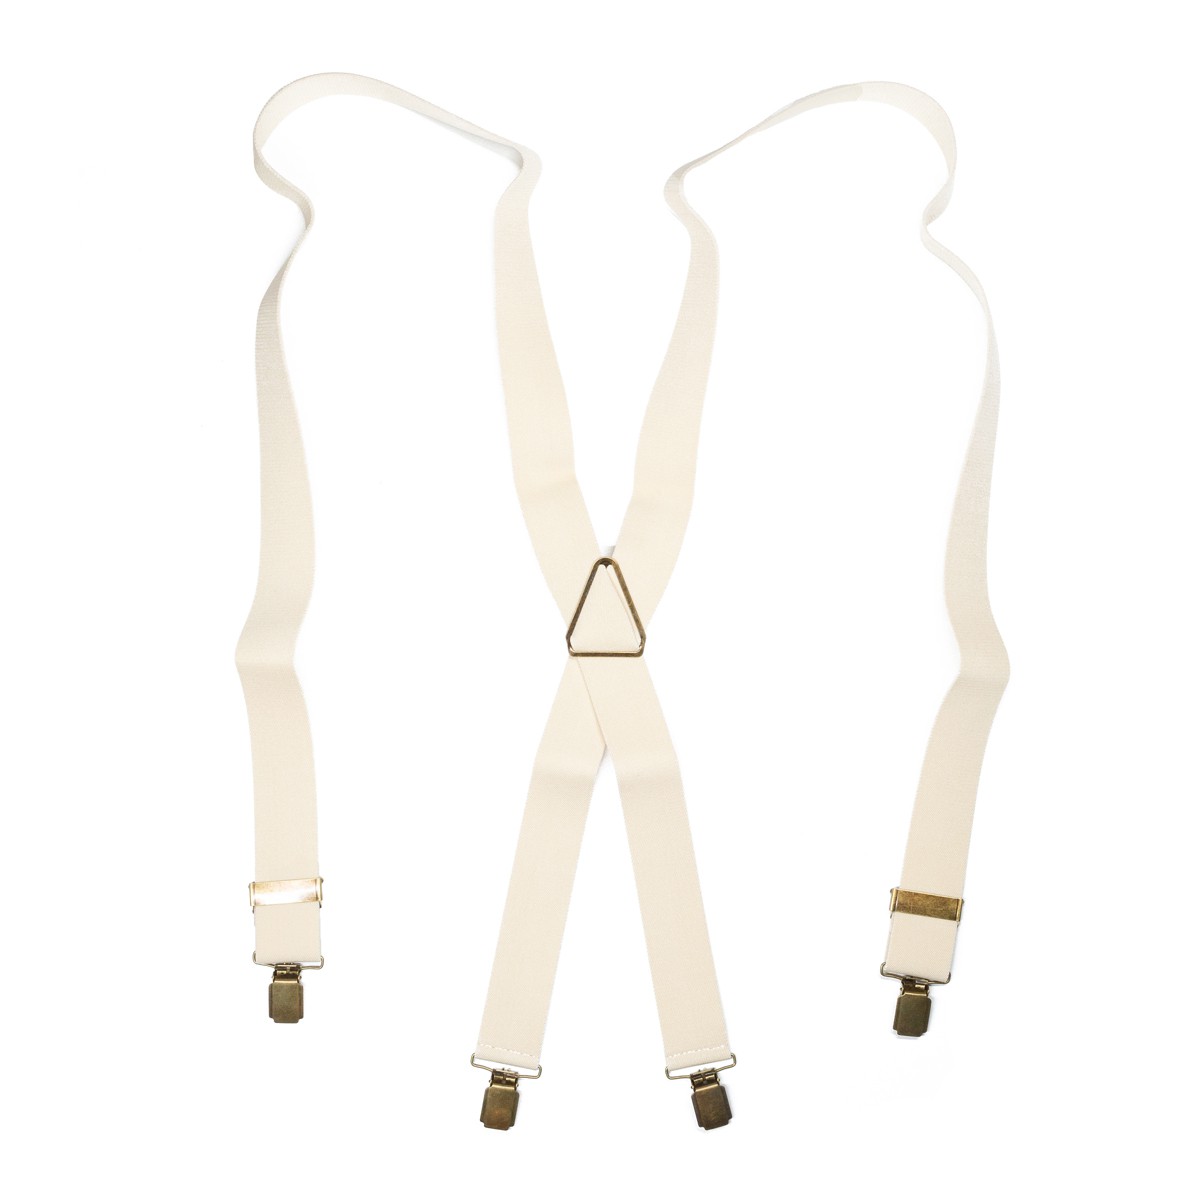 Suspender - ecru - X model - 35mm - no leather - silver clips - metal triangle